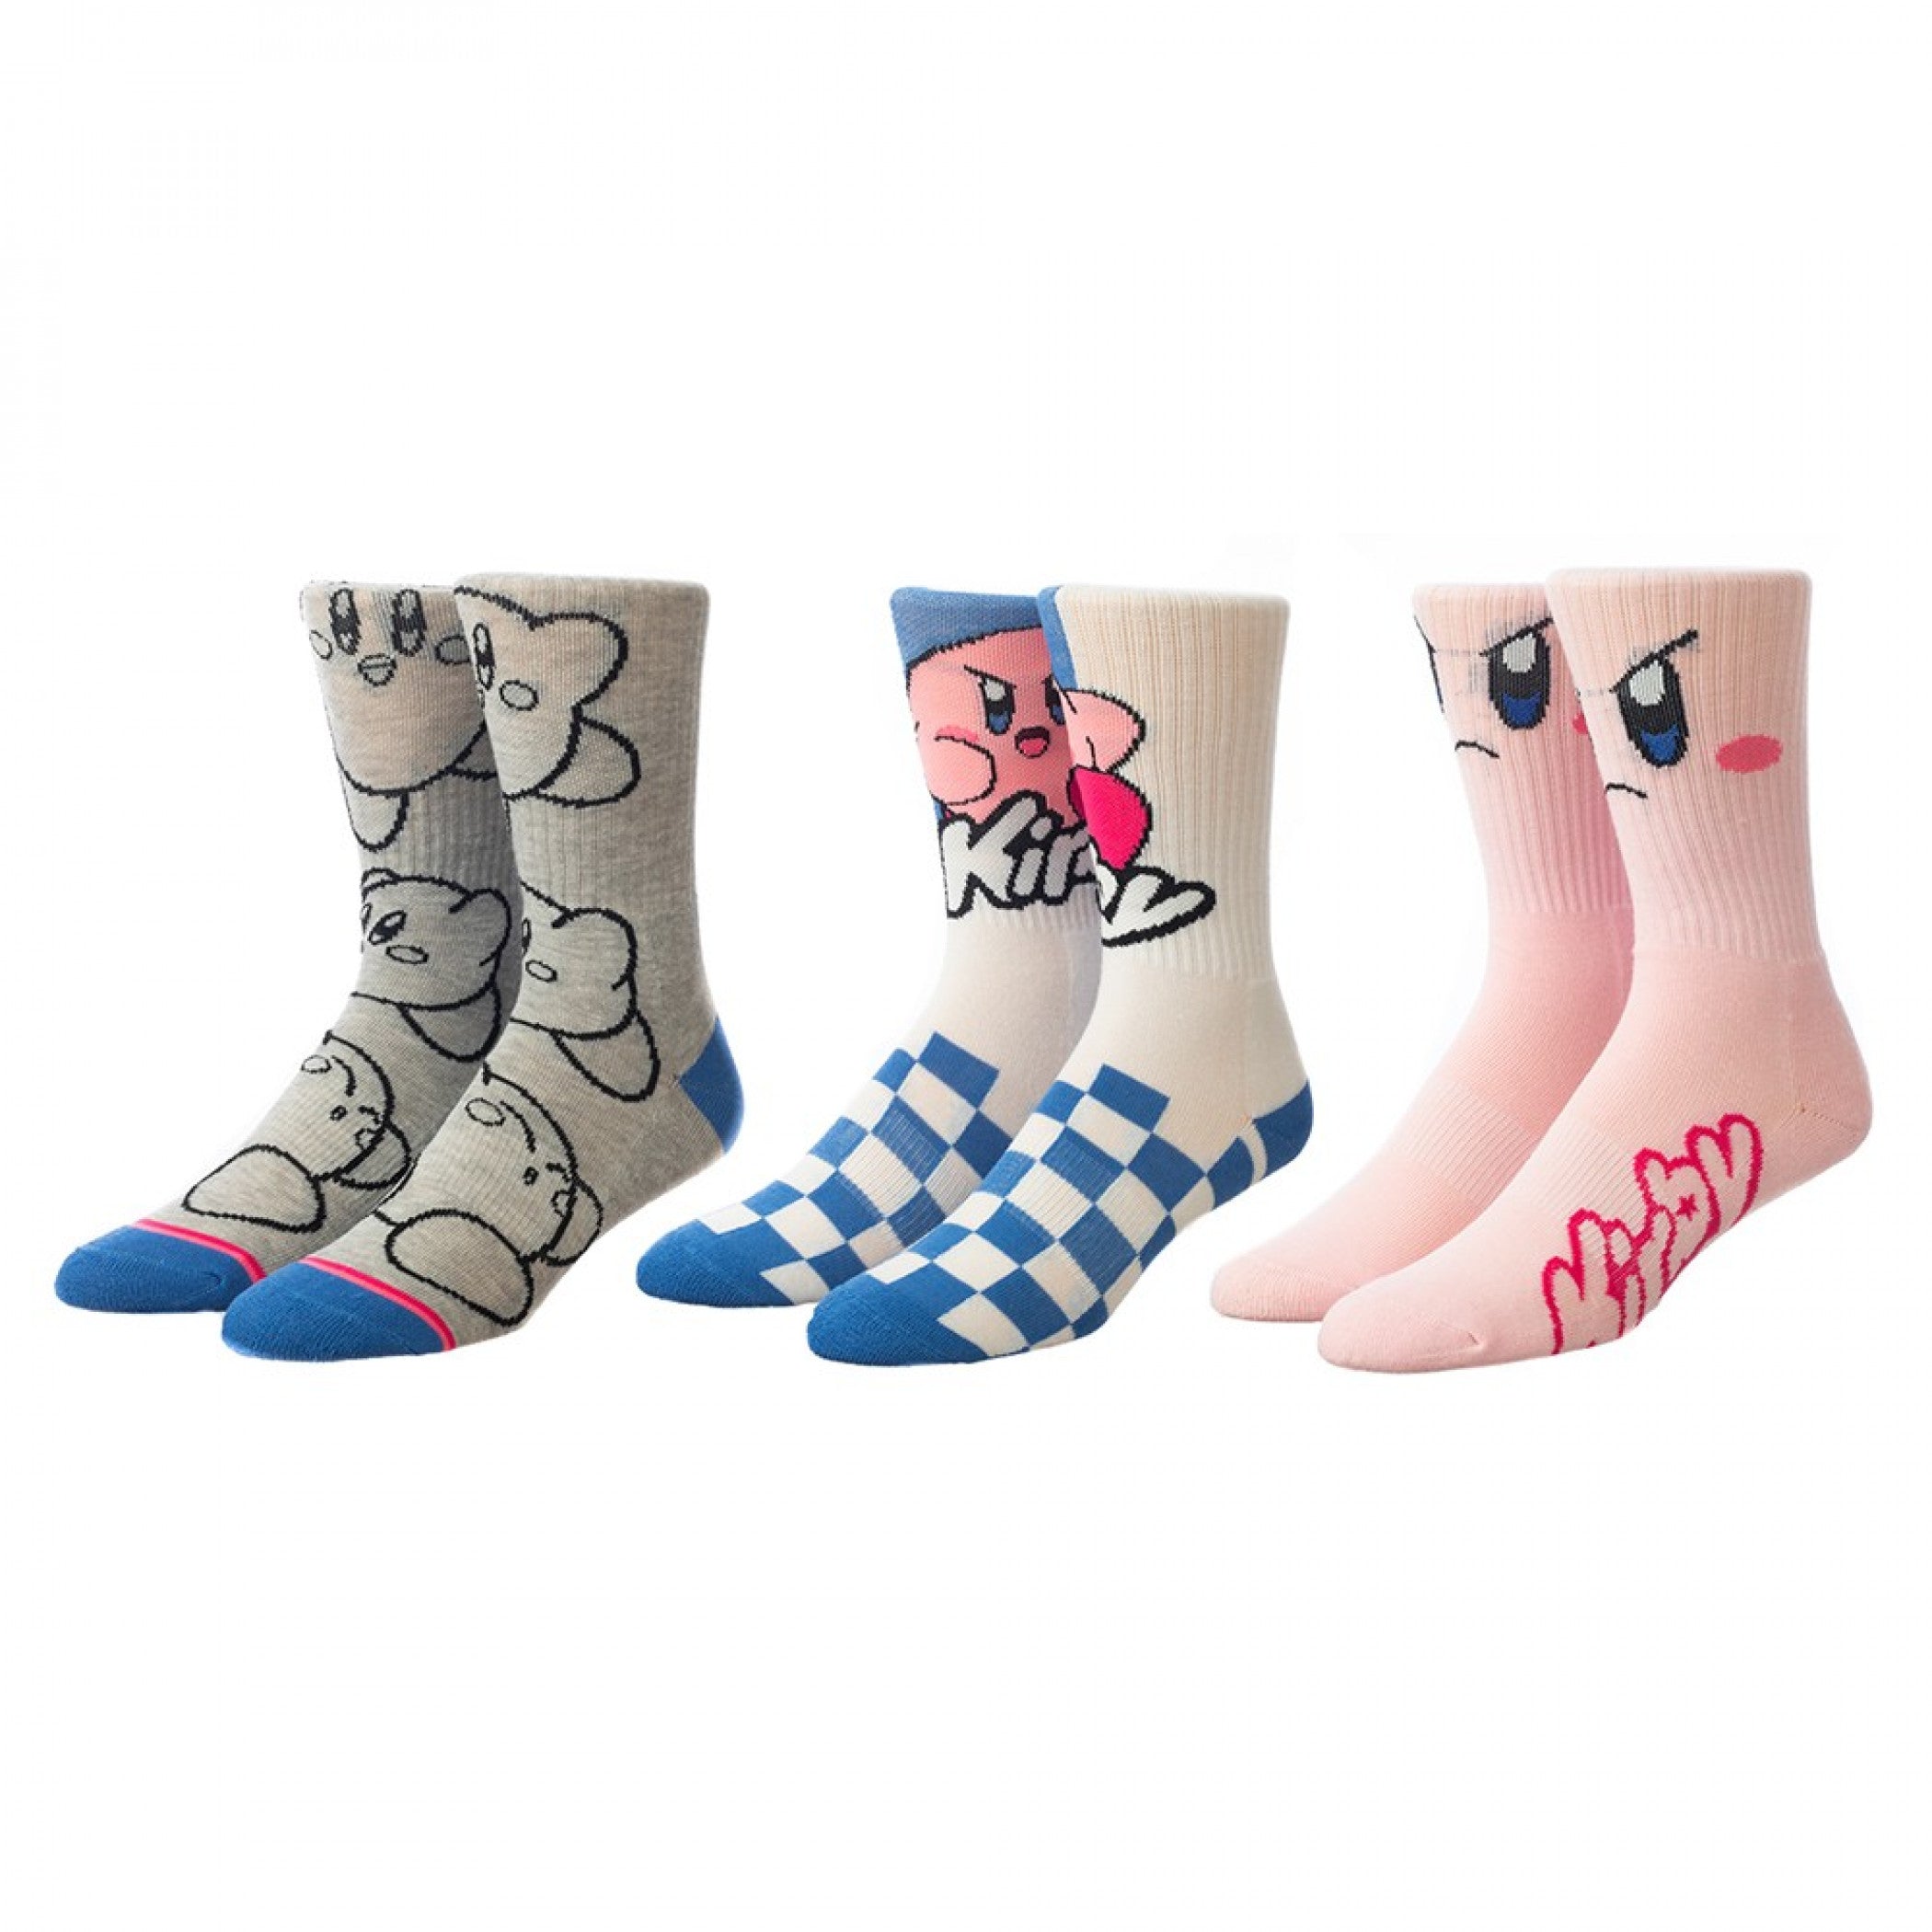 Nintendo Kirby 3-Pair Pack of Women's Casual Crew Socks